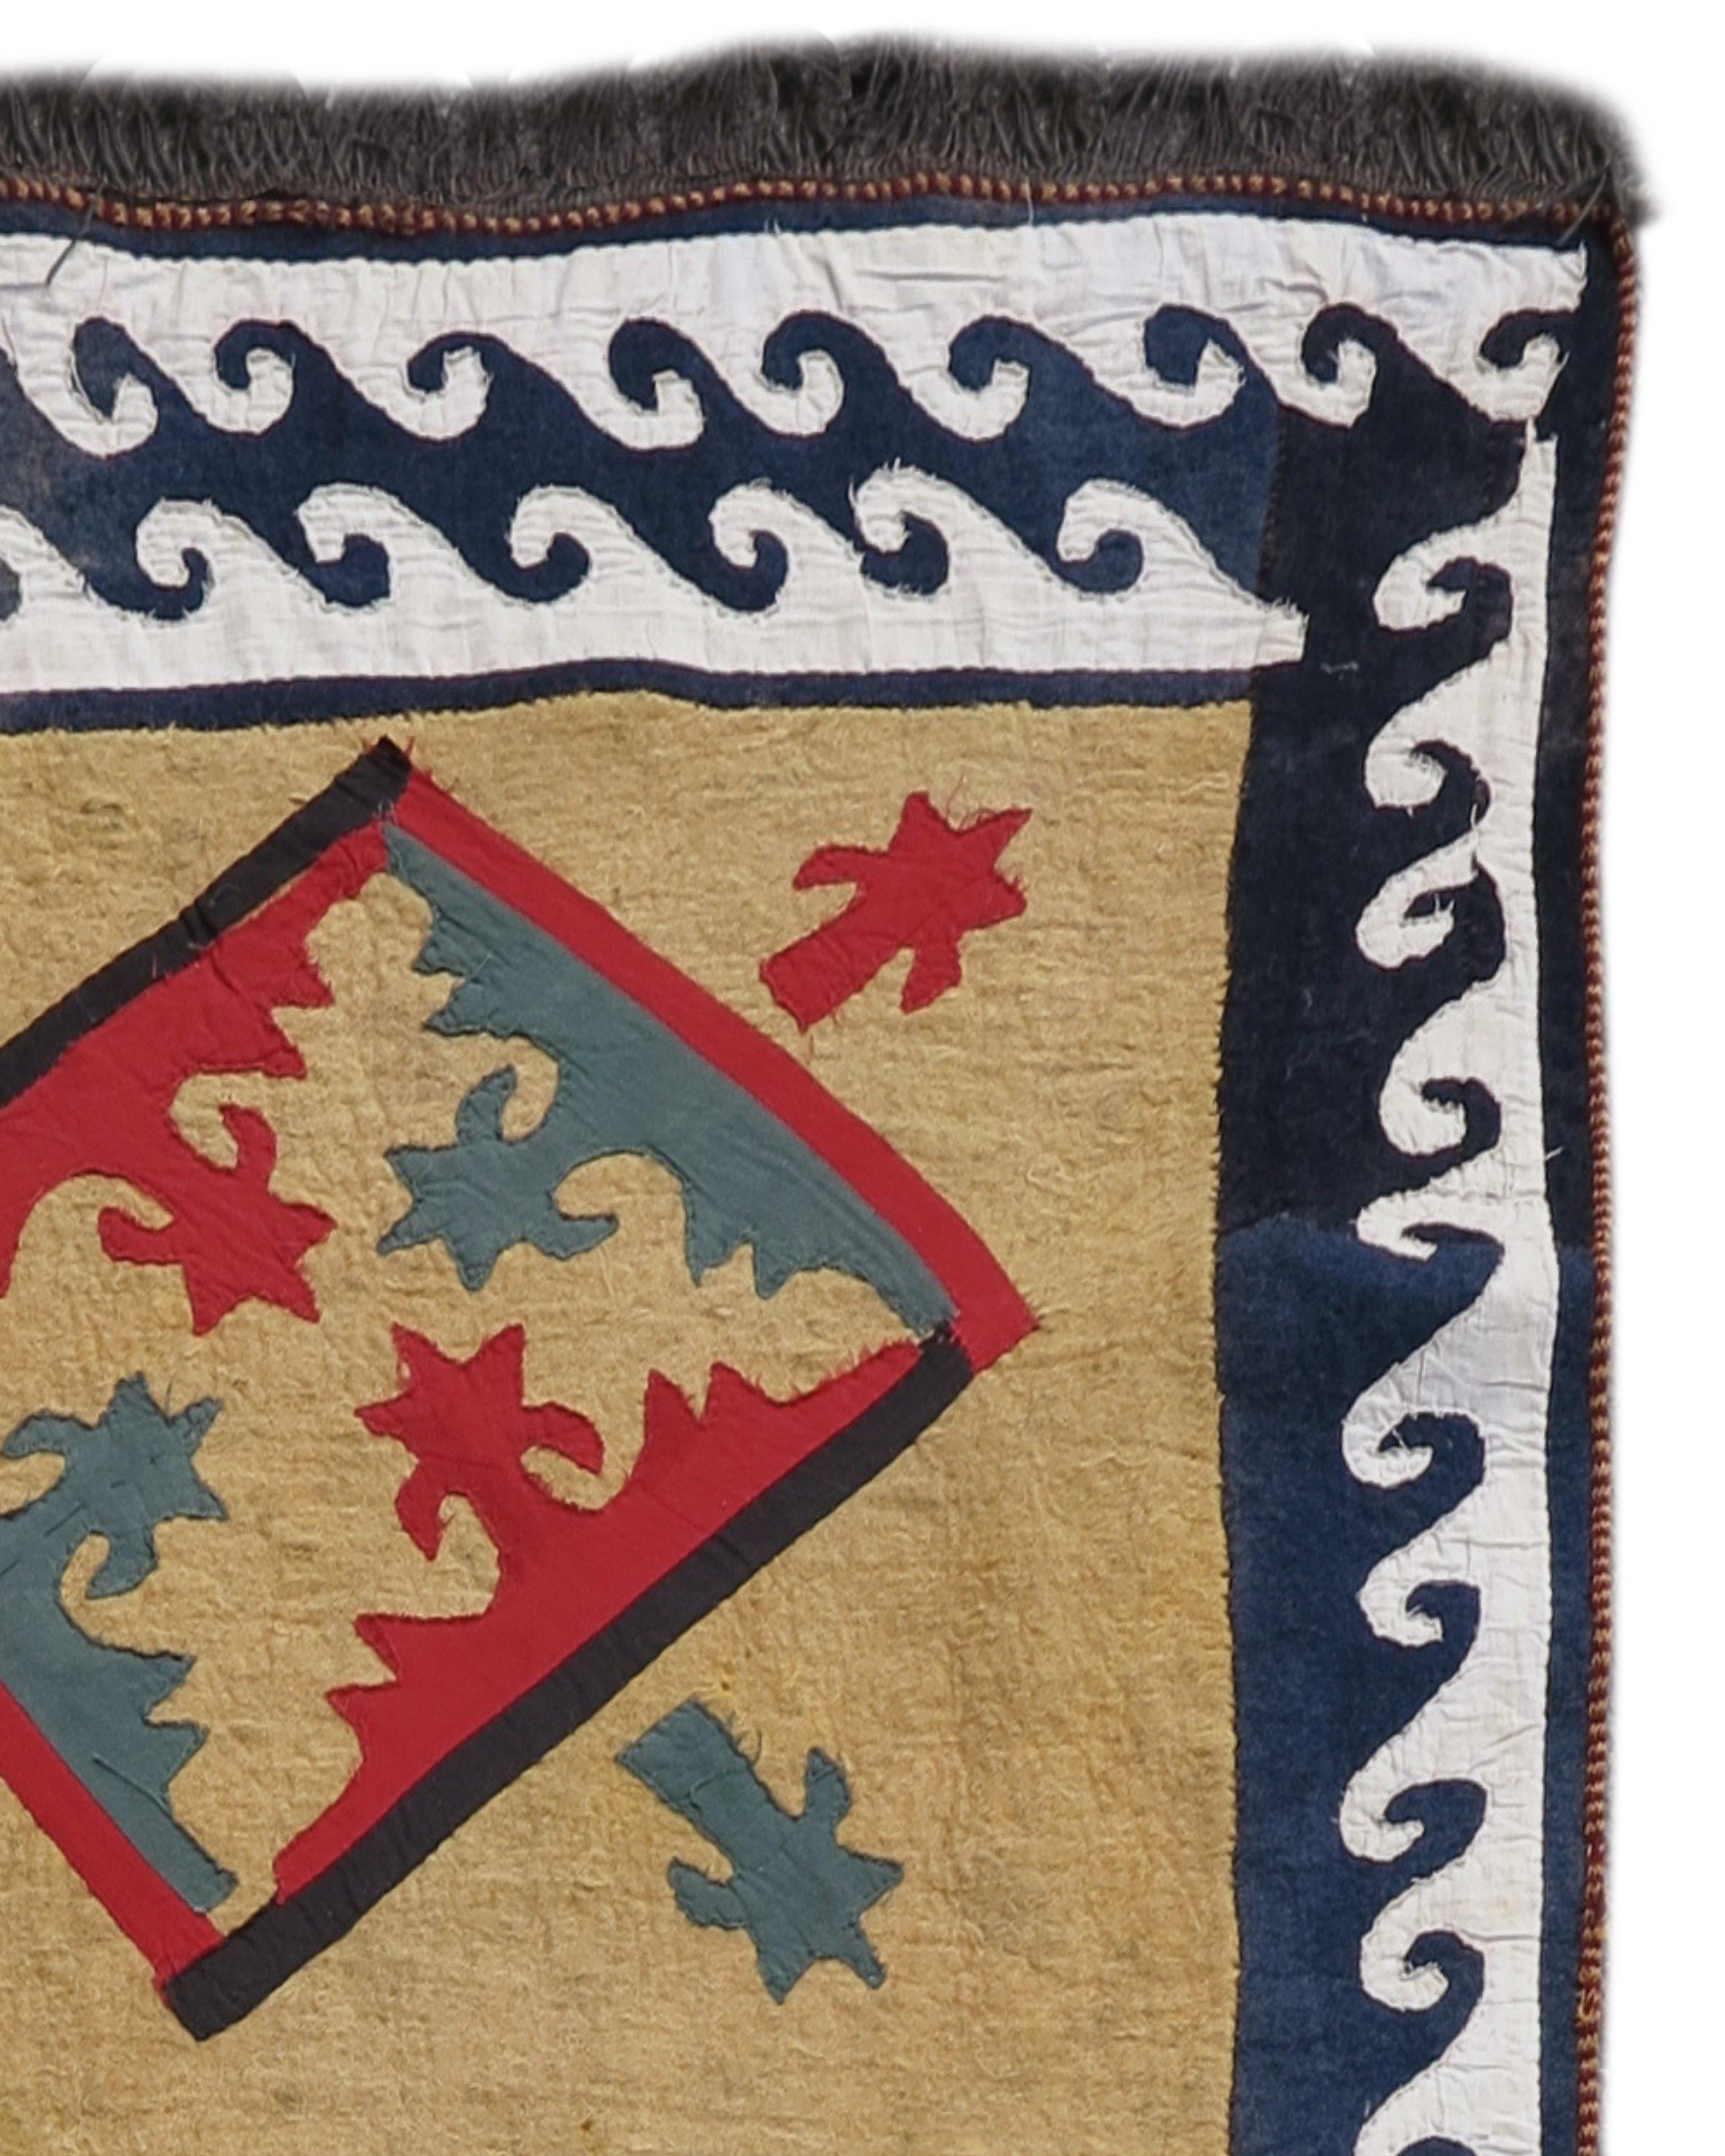 Antique Kyrgyz Felt and Applique Cover Rug, c. 1900

Additional Information:
Dimensions: 3'11